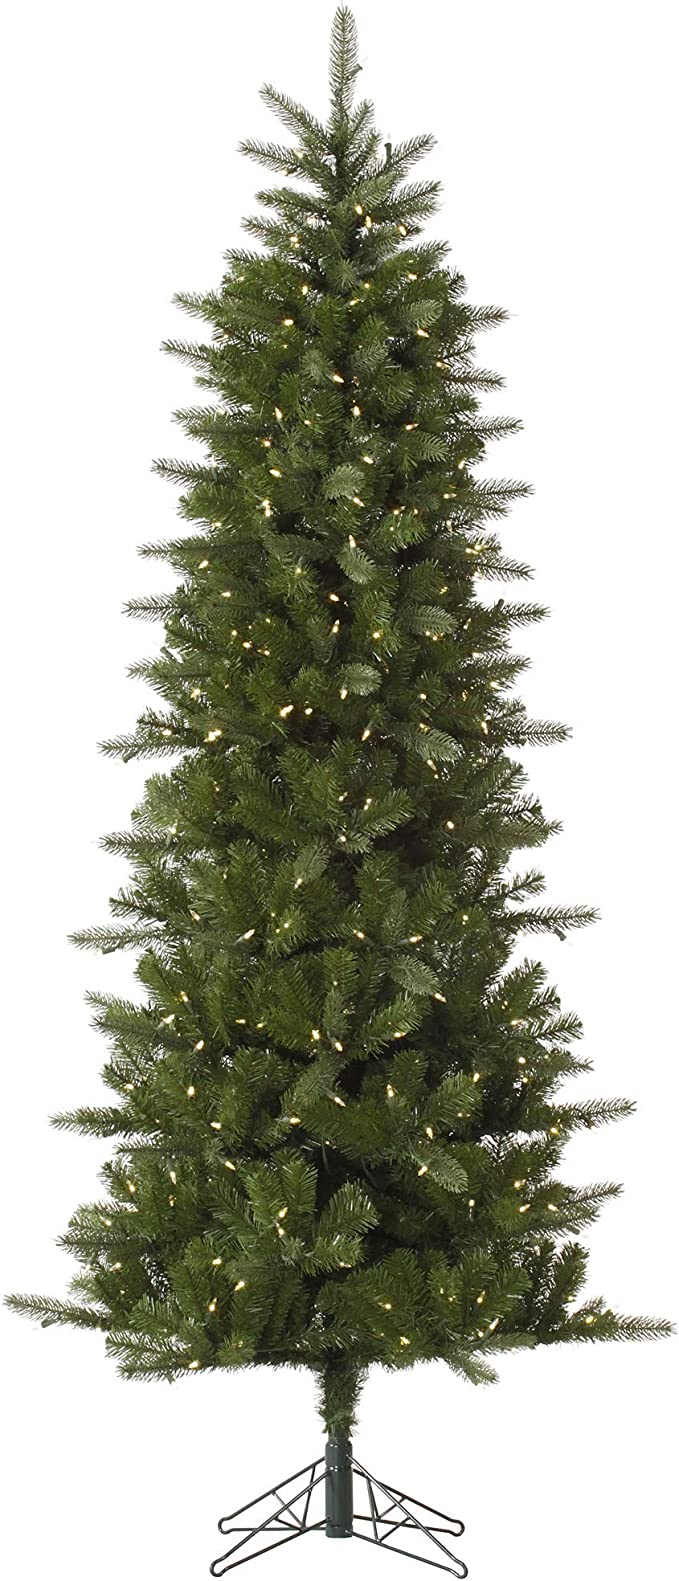 10' Carolina Pencil Spruce Artificial Christmas Tree, Warm White Dura-Lit® LED Lights - Faux Christmas Tree - Seasonal Indoor Home Decor